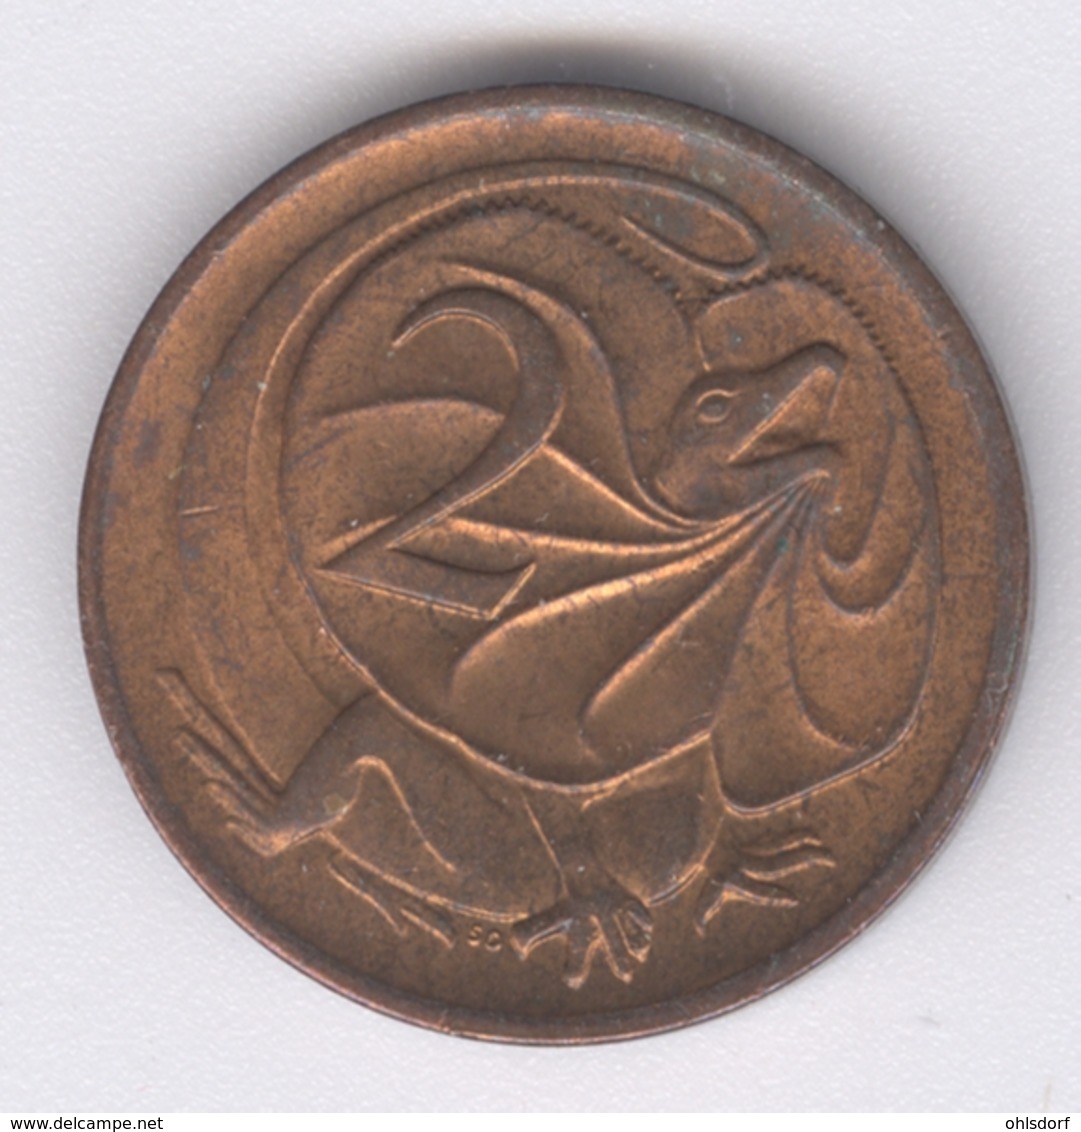 AUSTRALIA 1980: 2 Cents, KM 63 - 2 Cents